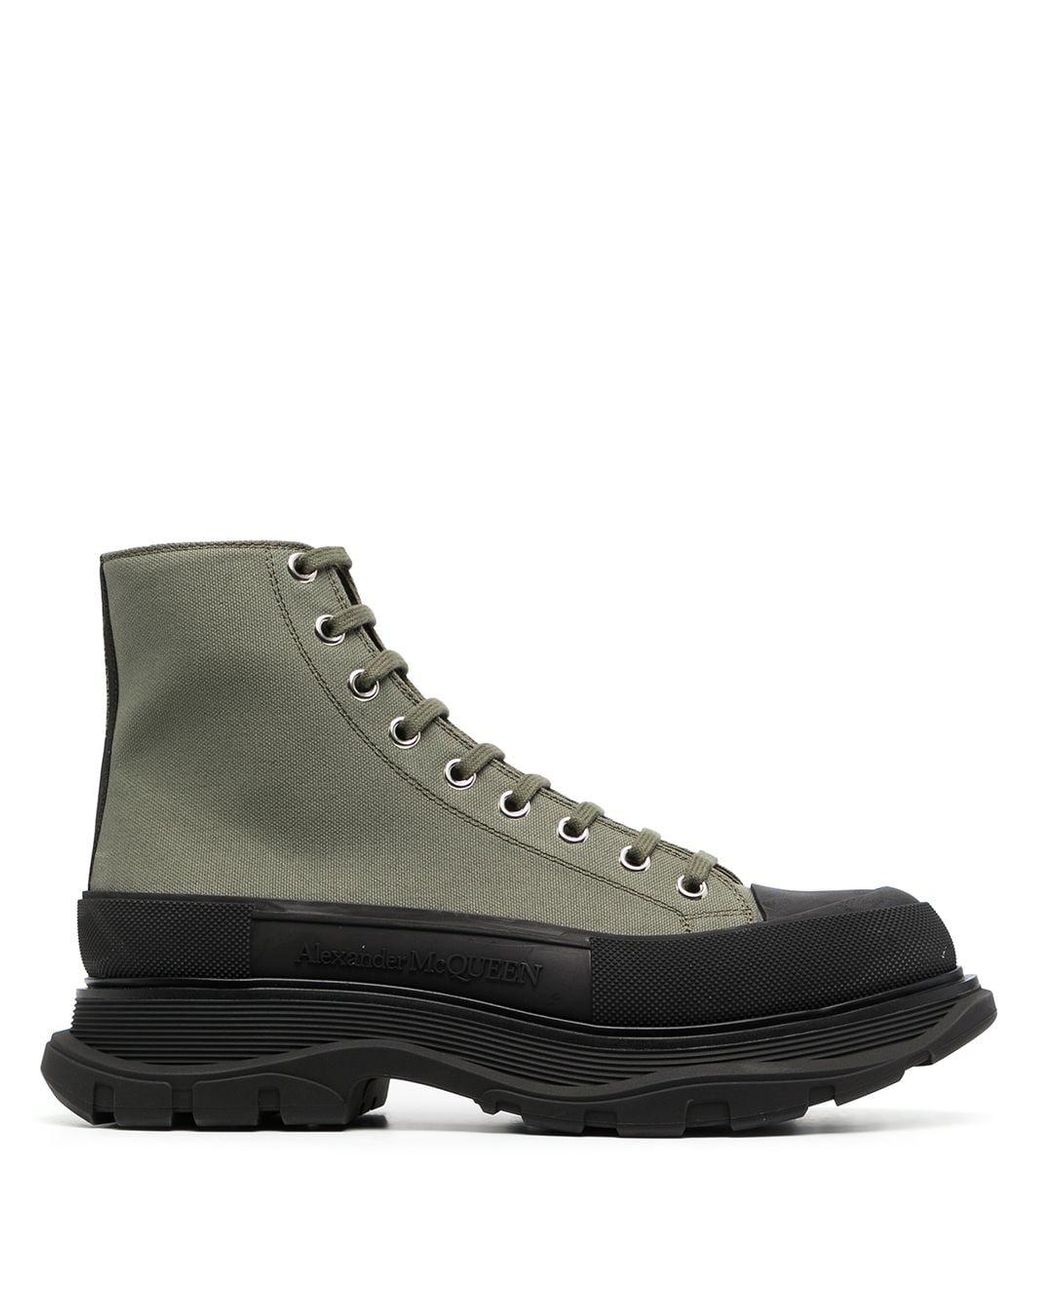 Alexander McQueen Leather Tread Slick Boots in Green for Men - Lyst